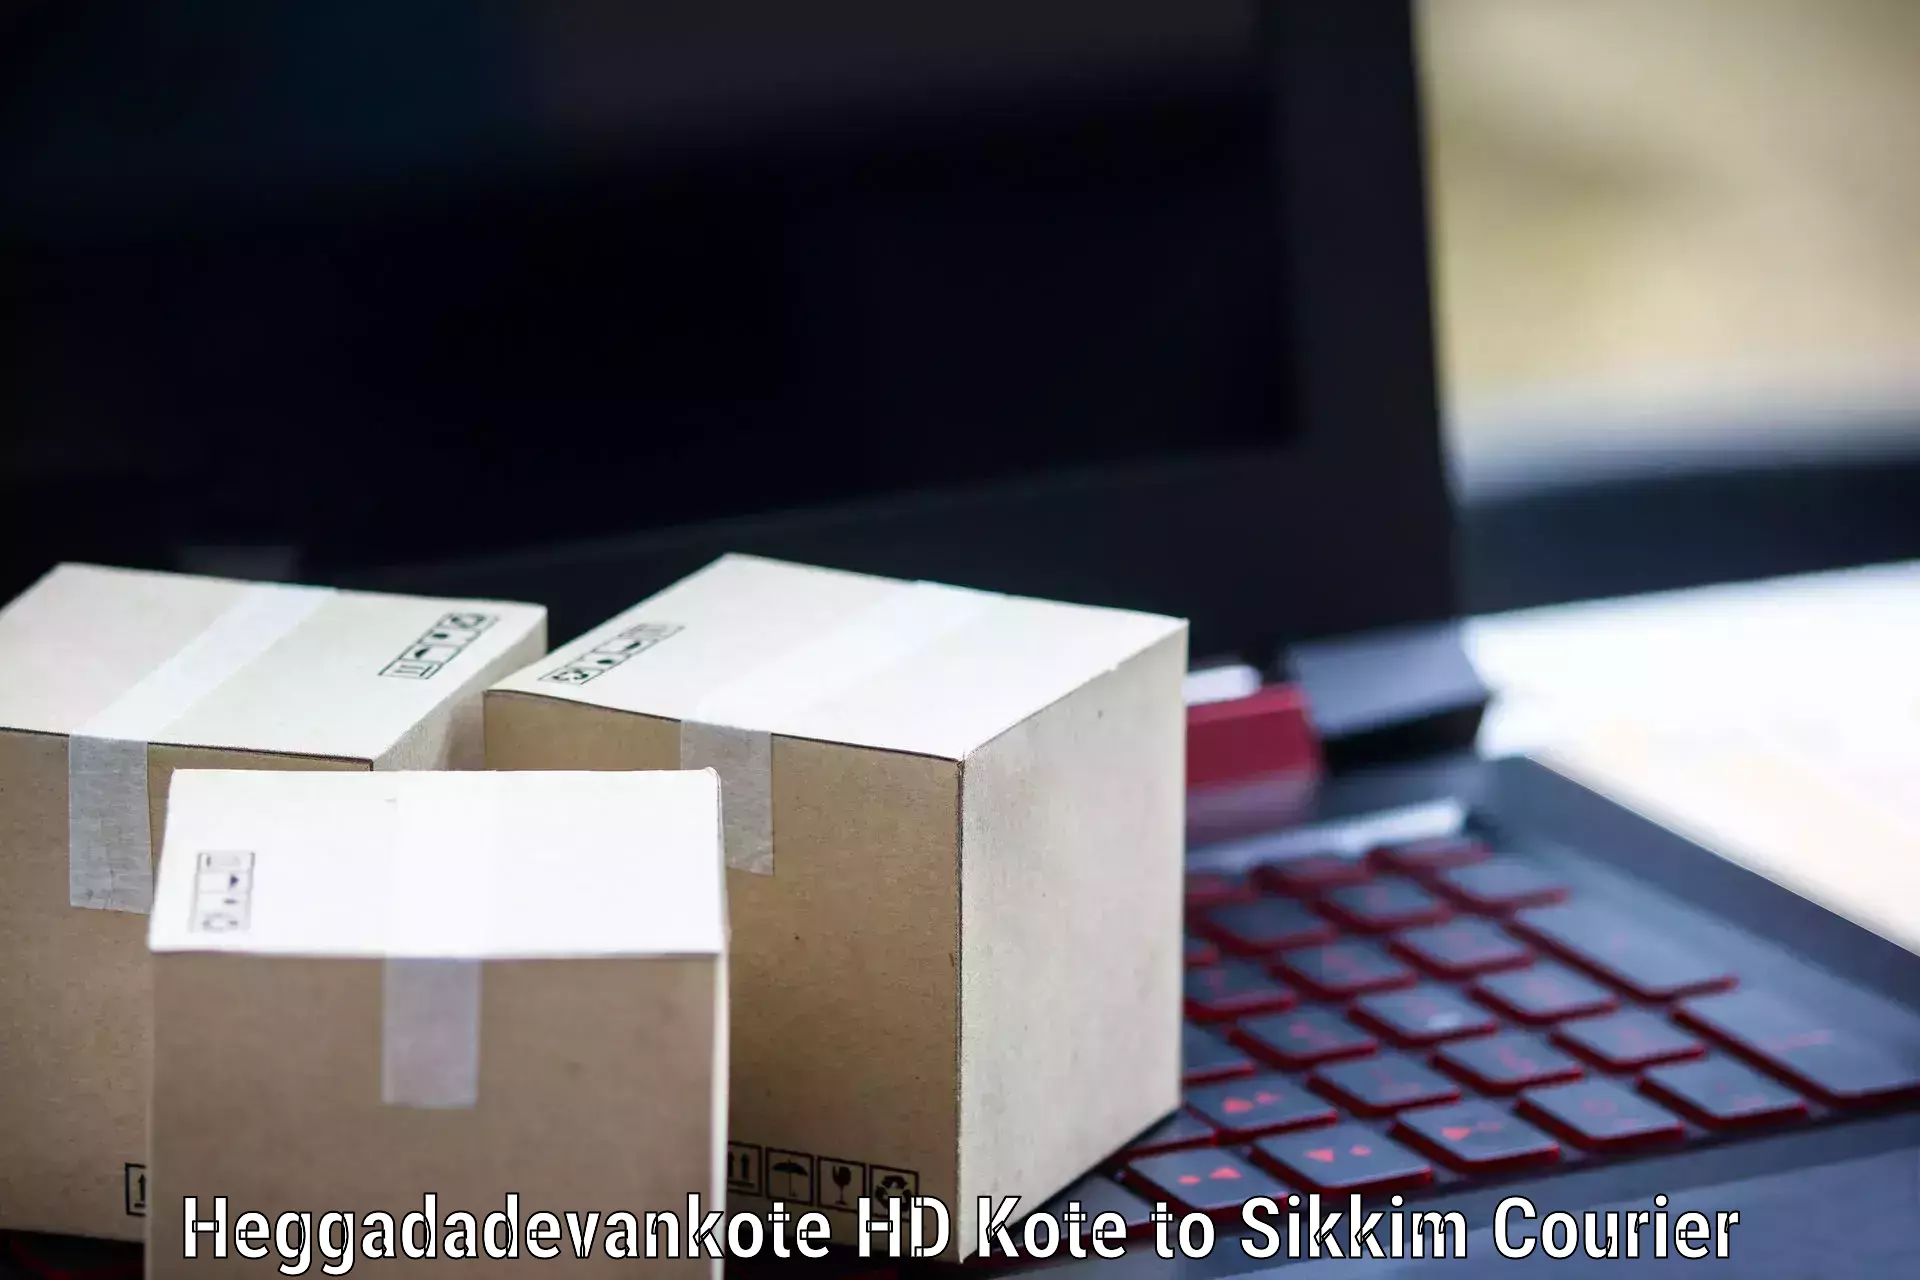 Efficient parcel service Heggadadevankote HD Kote to Geyzing